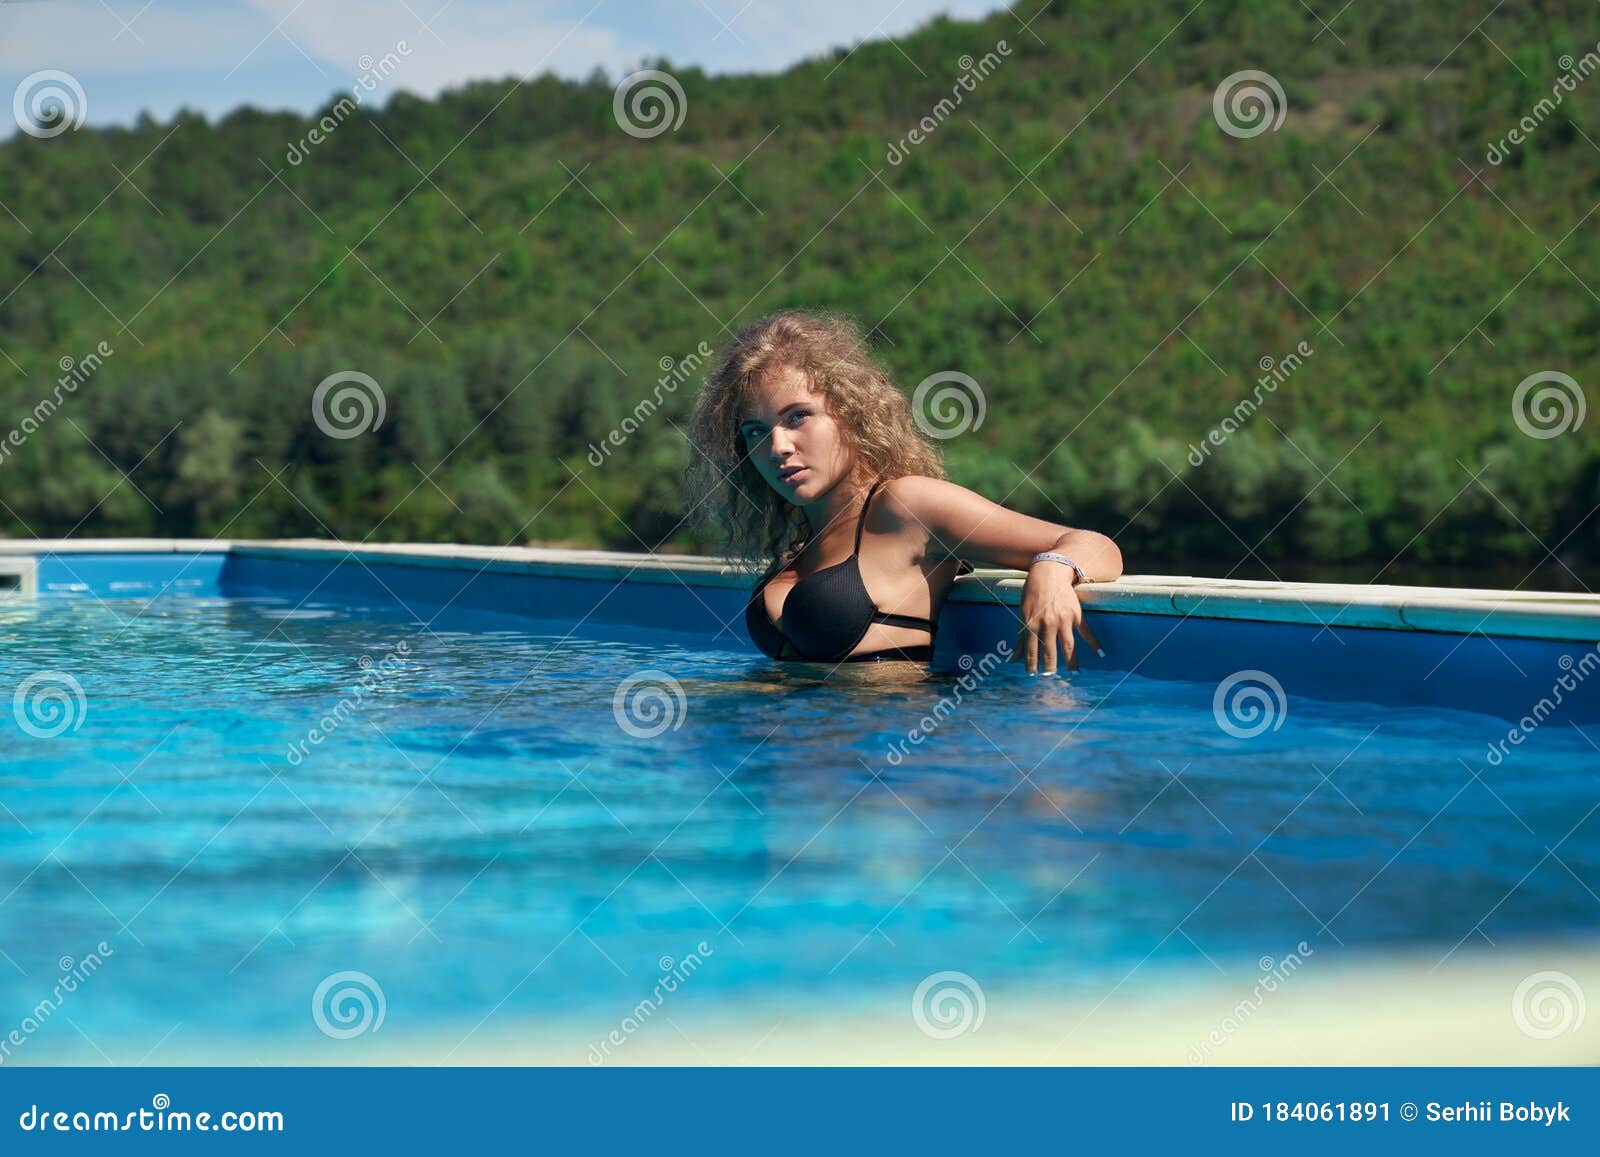 Девчонка на фоне бассейна